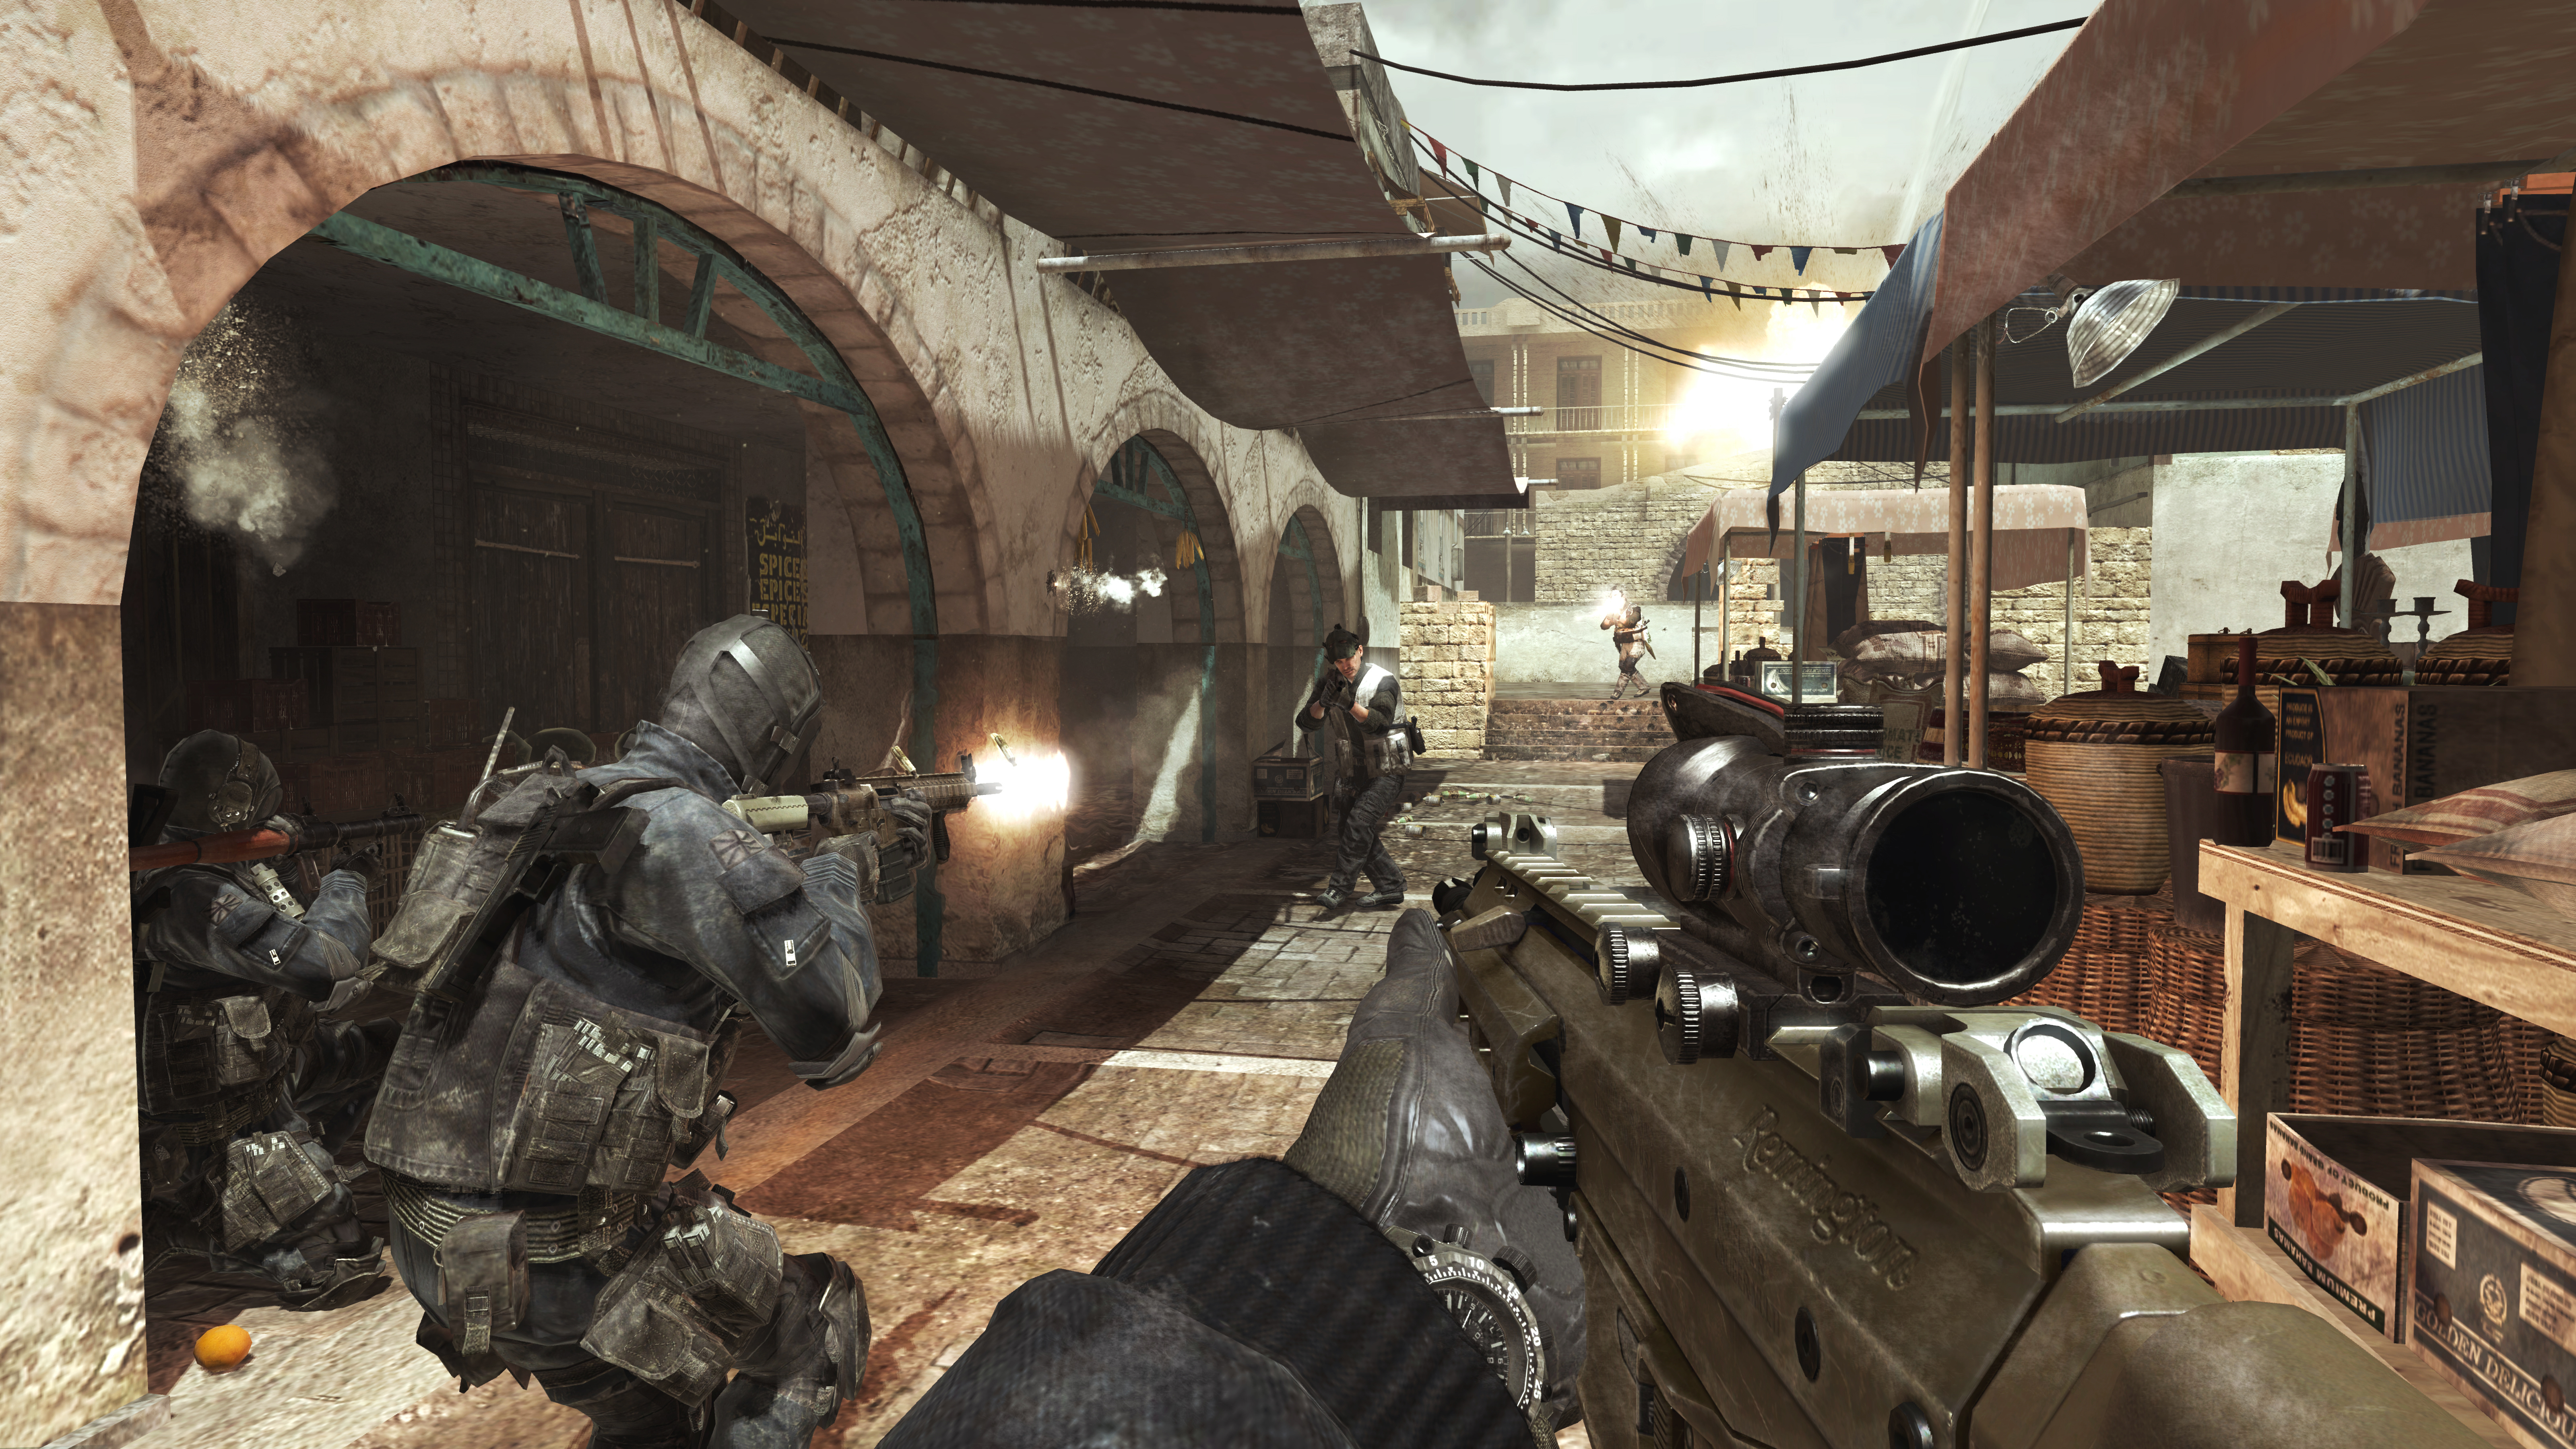 Call of Duty: Modern Warfare 3 - Download